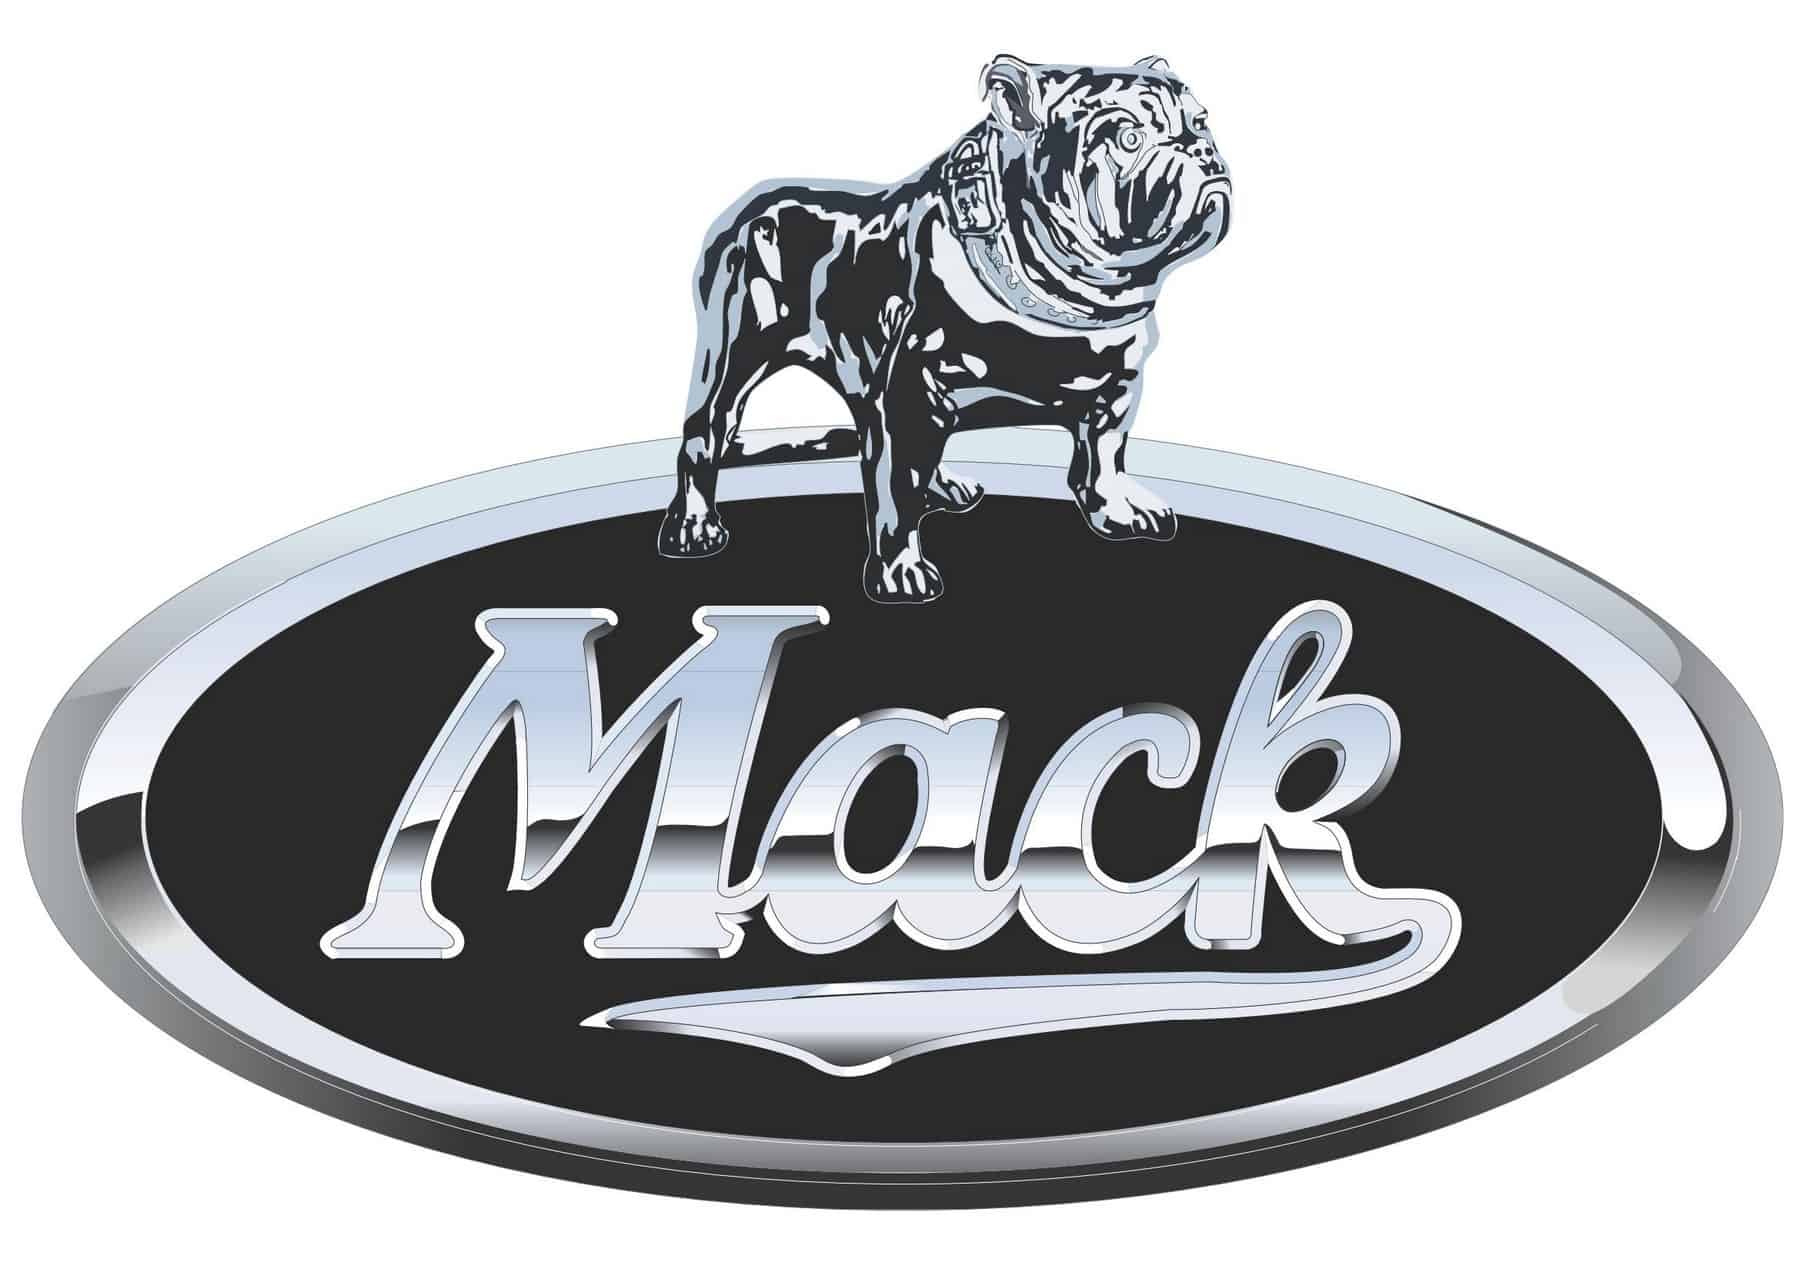 mack truck logo